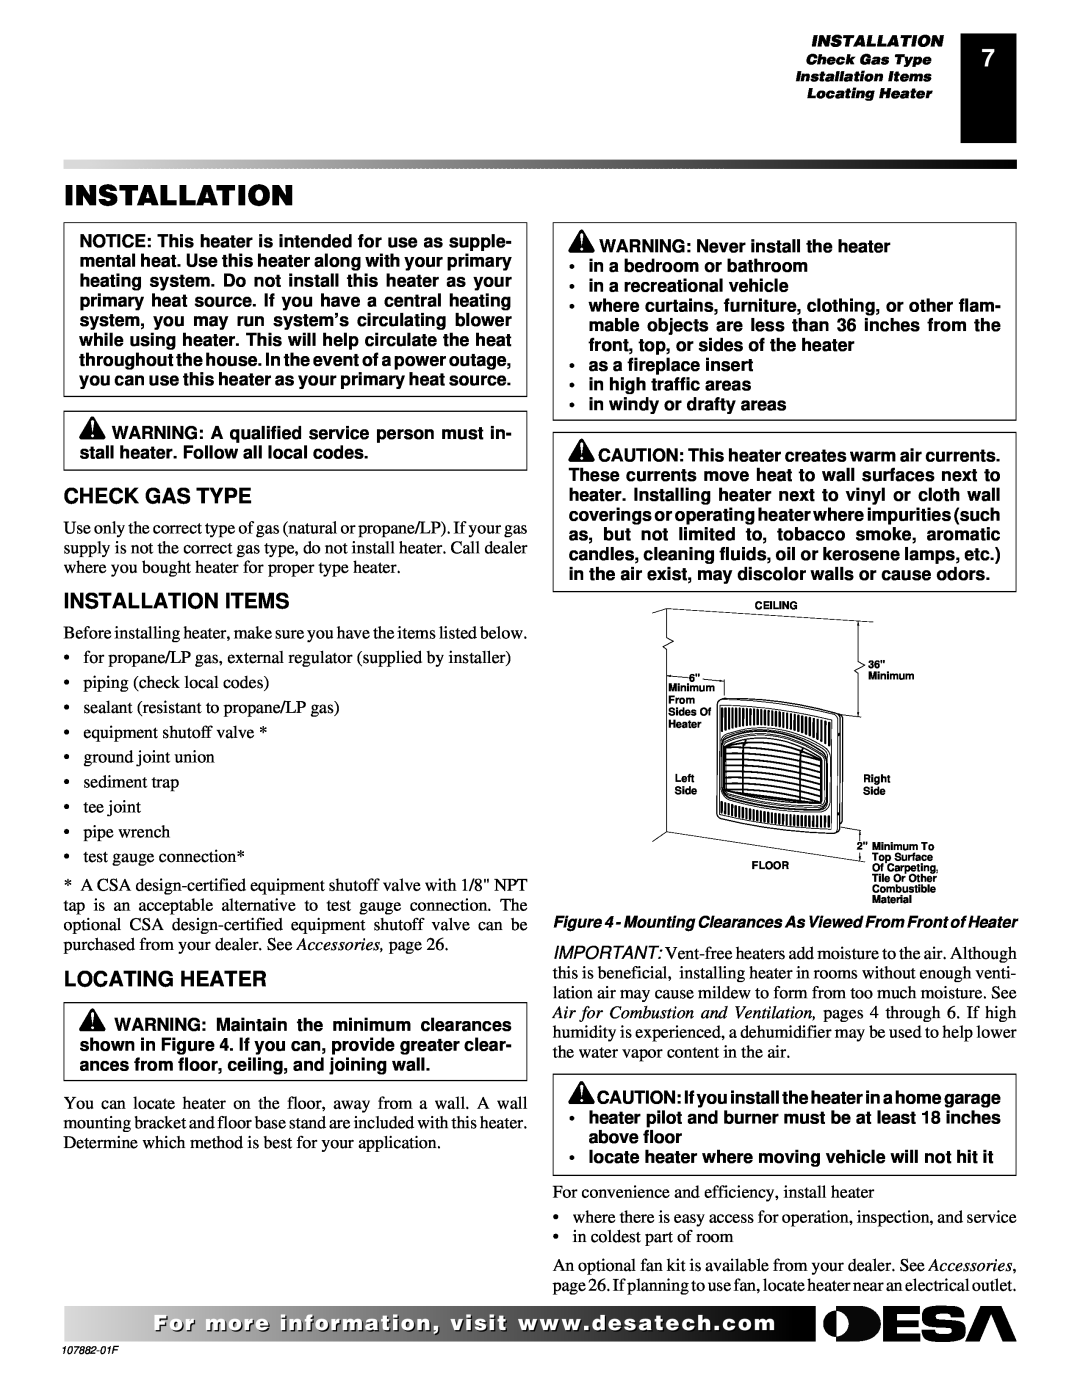 Desa CBN20 installation manual Check Gas Type, Installation Items, Locating Heater 